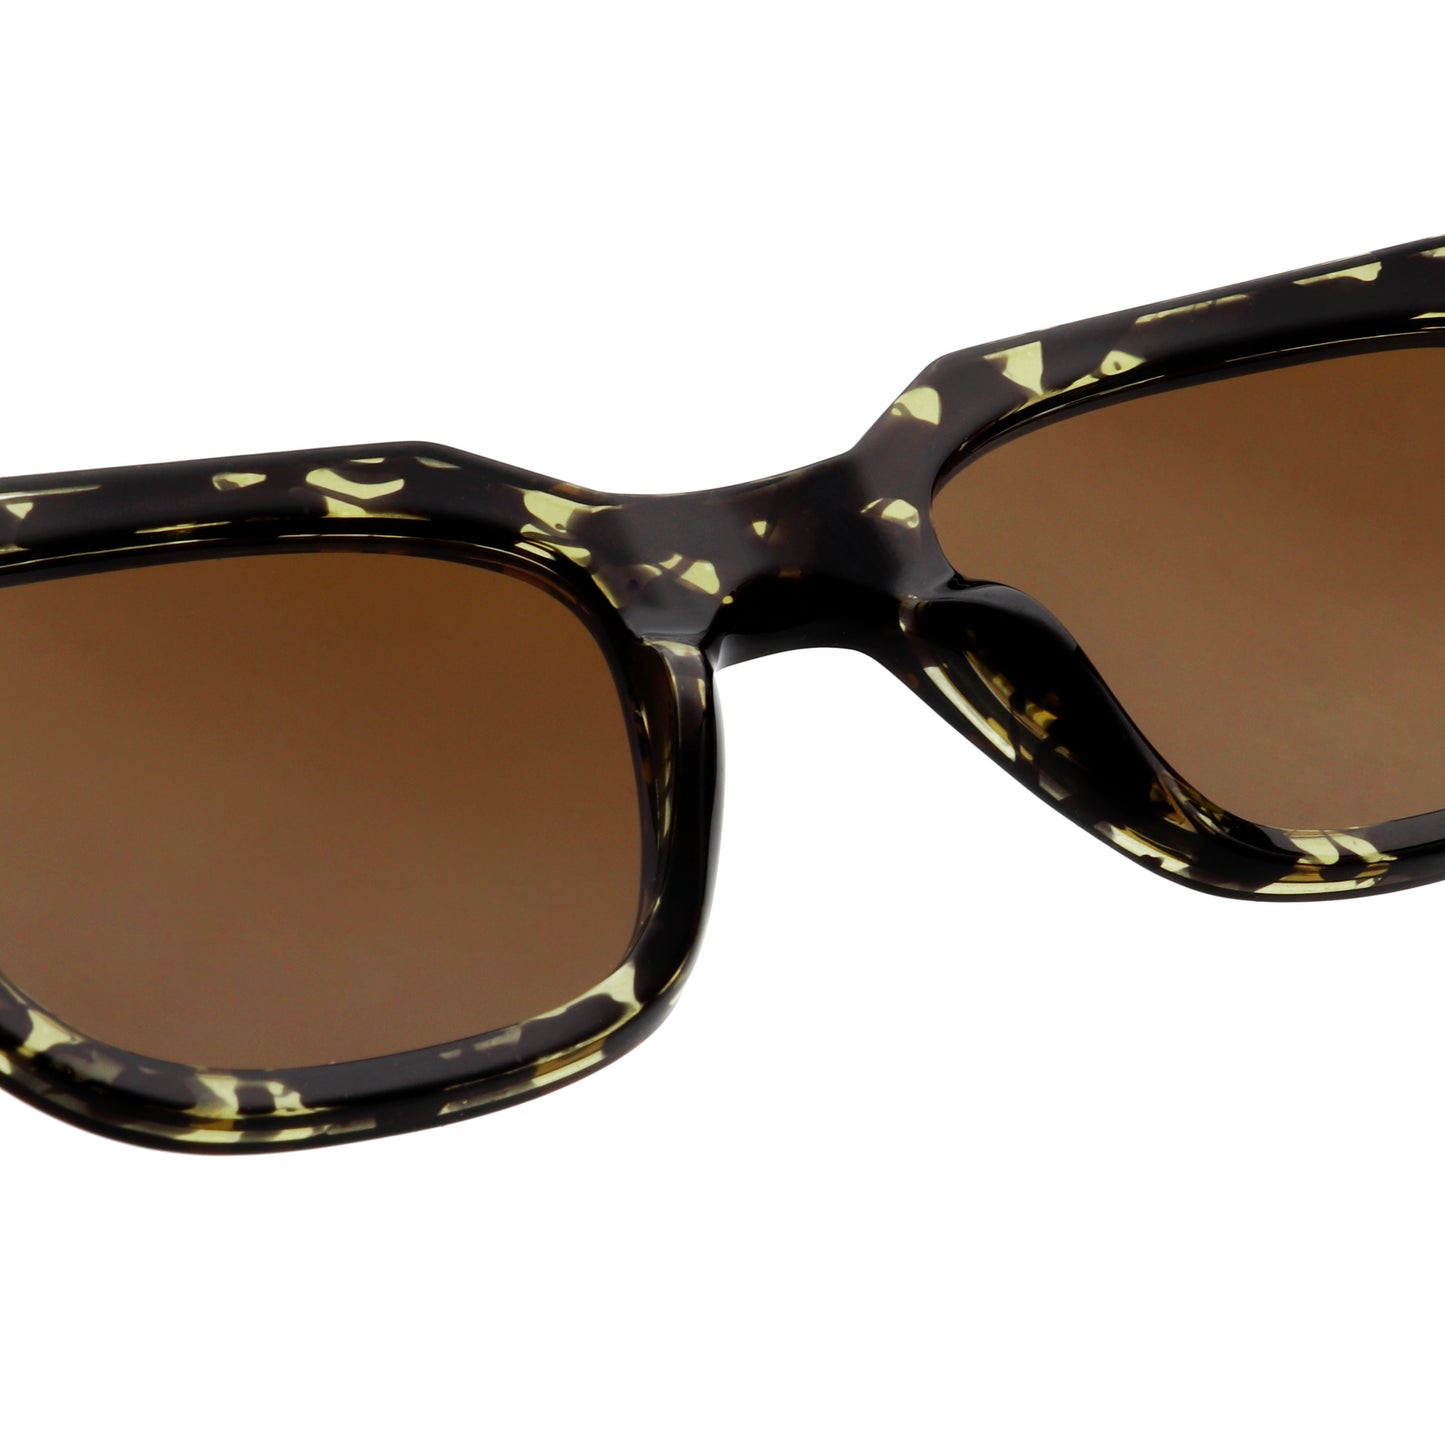 A.Kjaerbede Kaws Sunglasses in Black & Yellow Tortoise color